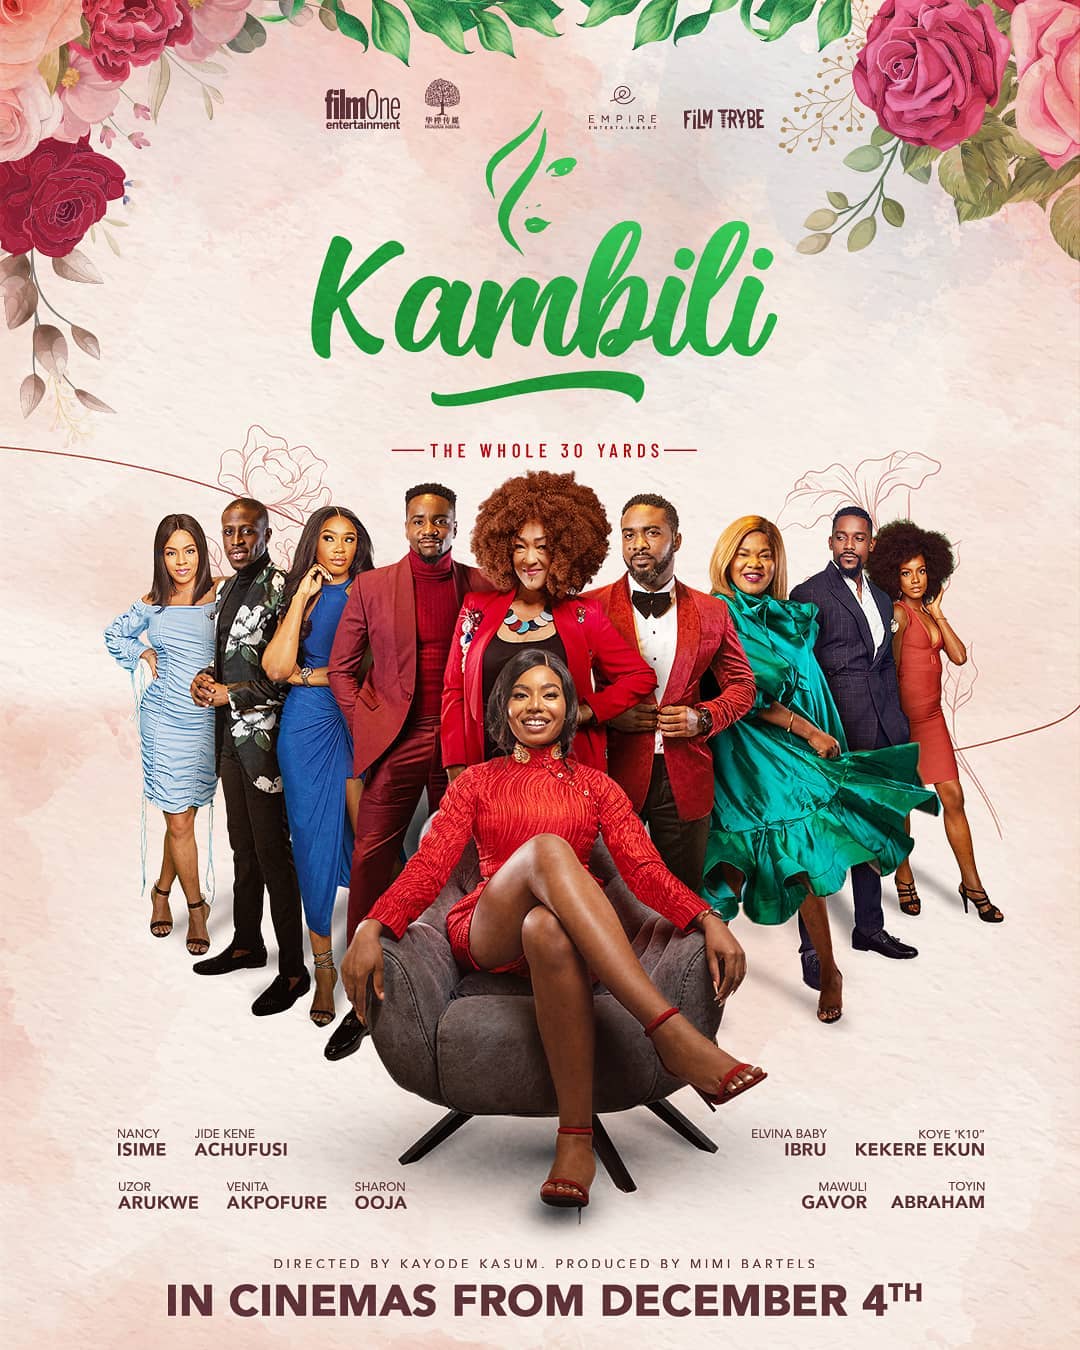 127016065 307932830263448 6995604875162473101 n - Kambili Movie: Dir by Kayode Kasum Stars Jide Kene,Nancy Isime, Elvina Ibru -See Full List